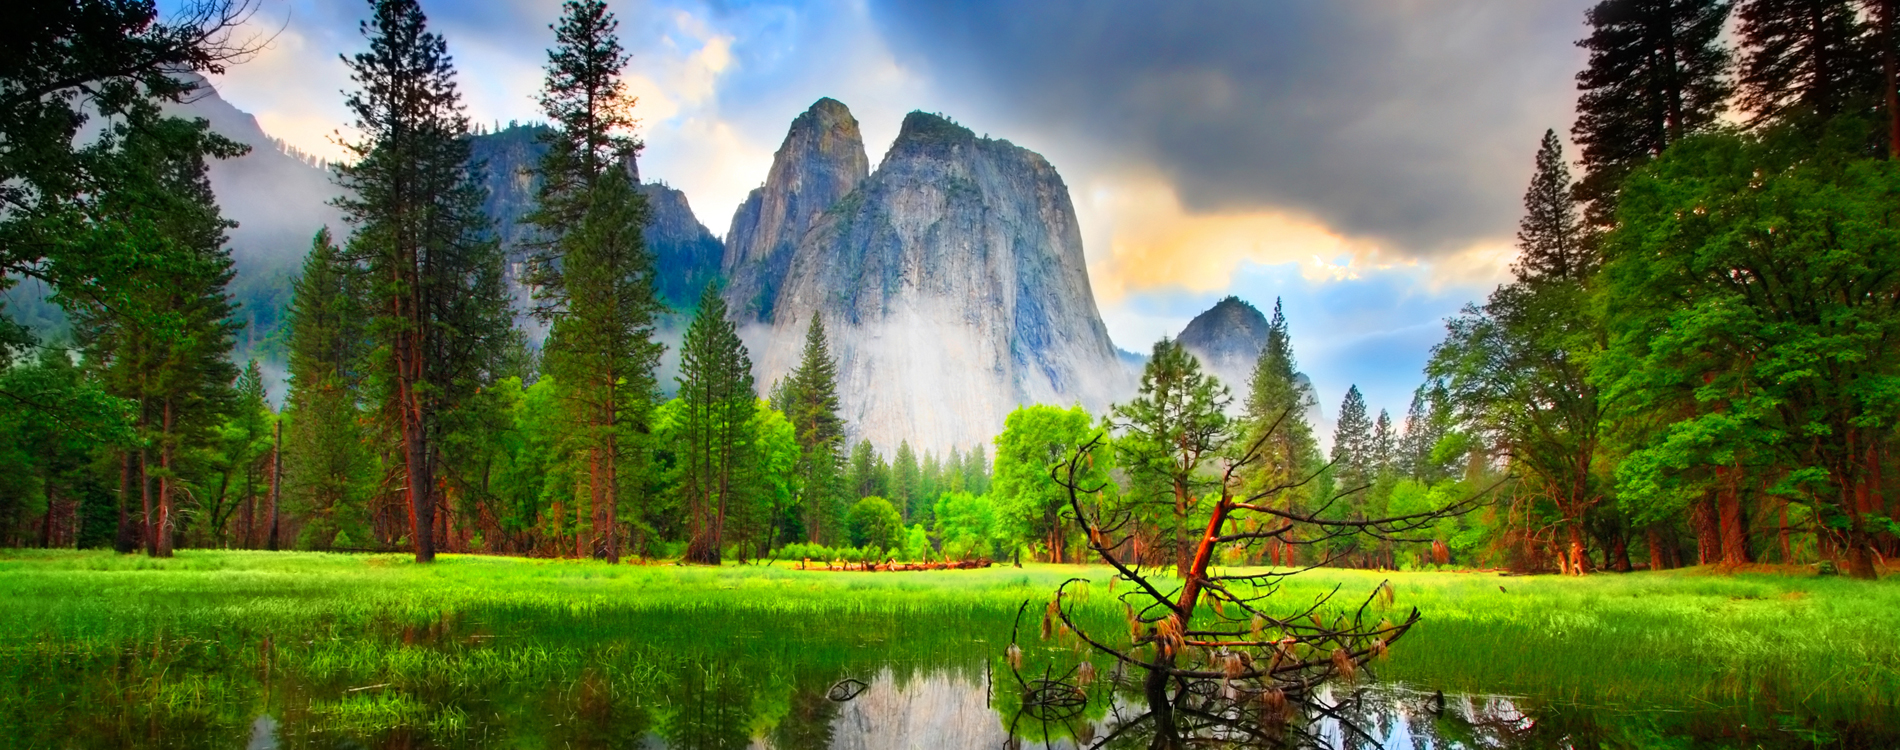 Yosemite National Park - Cathedral Rocks